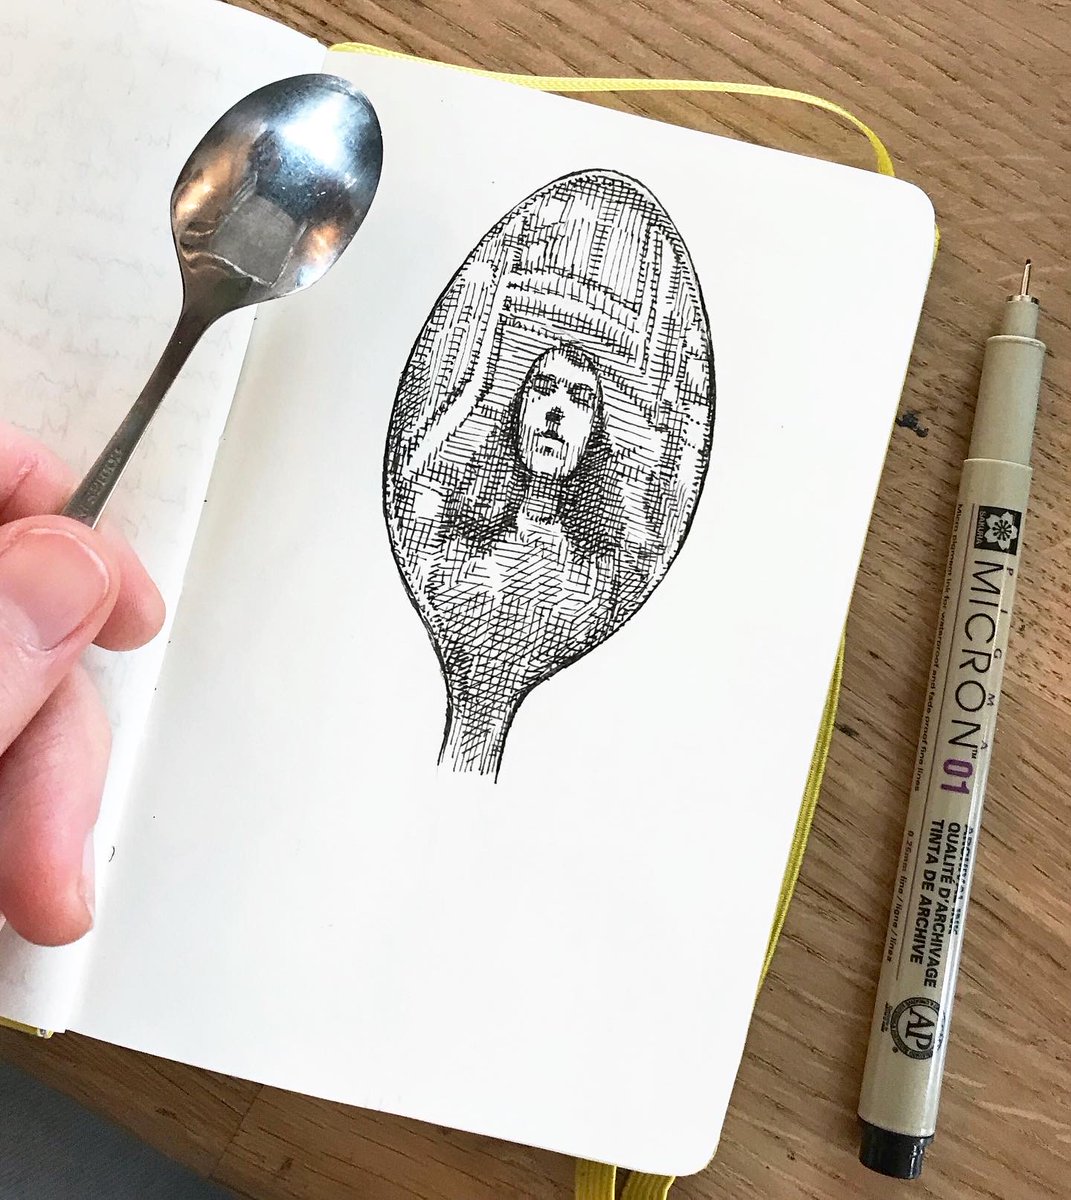 Self portraits reflected in a teaspoon